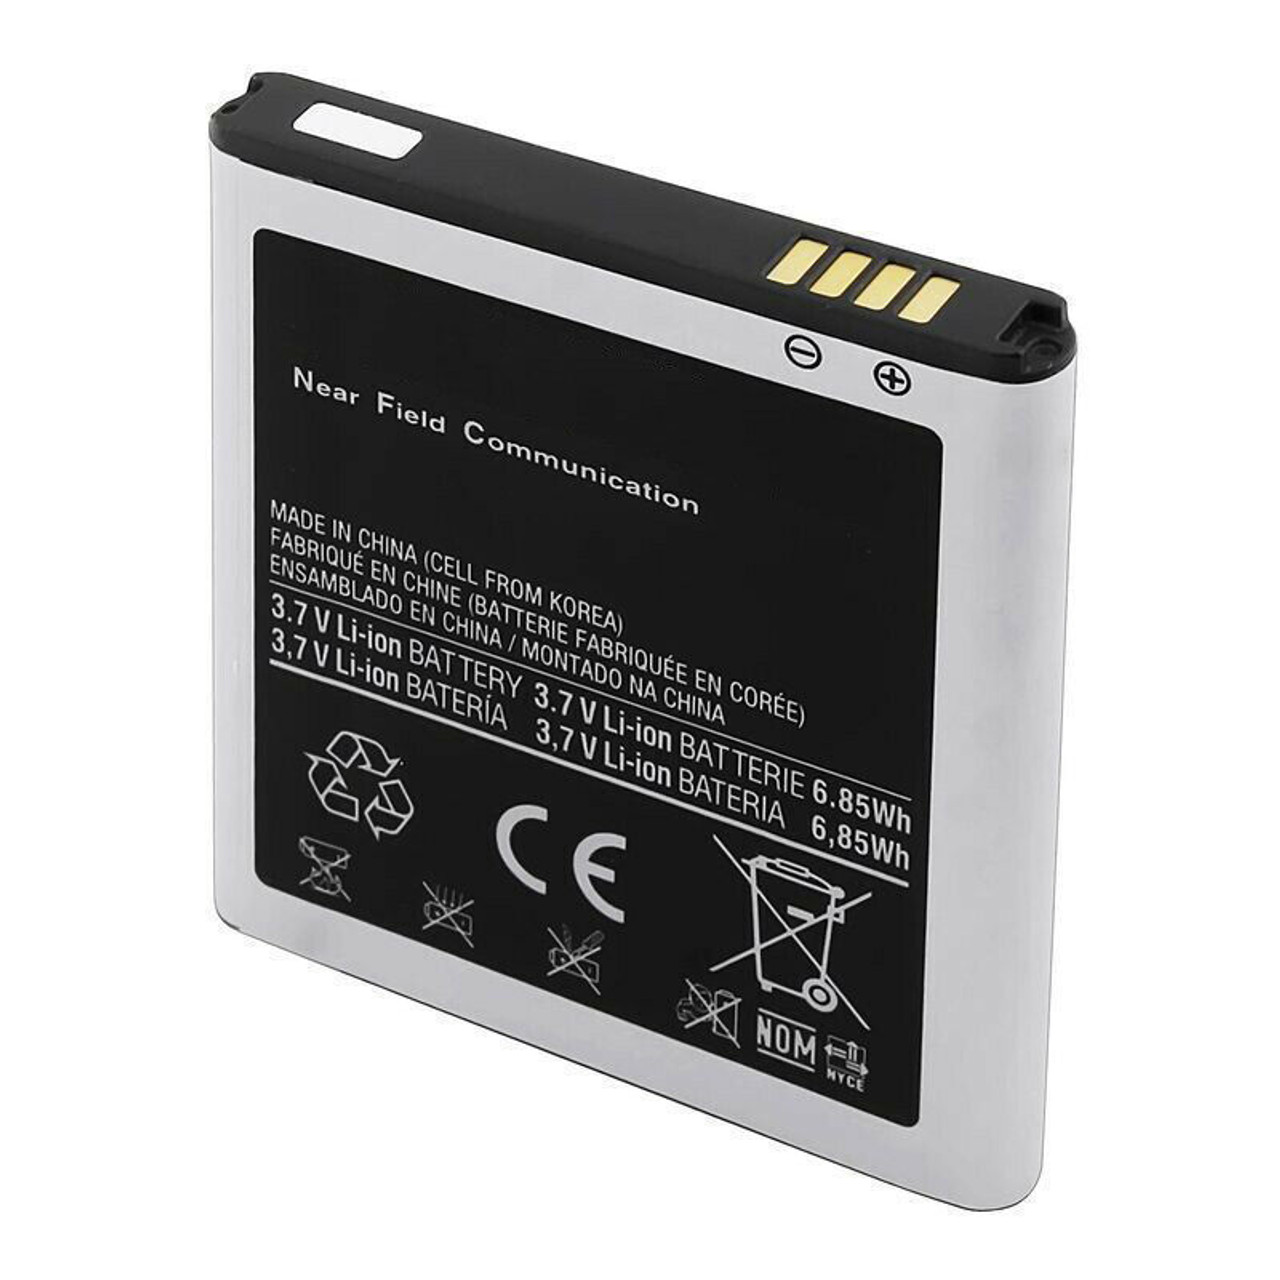 OEM SPEC EB-L1D7IBA Battery for Samsung Galaxy S2 II 2 T989 AT&T Skyrocket i727